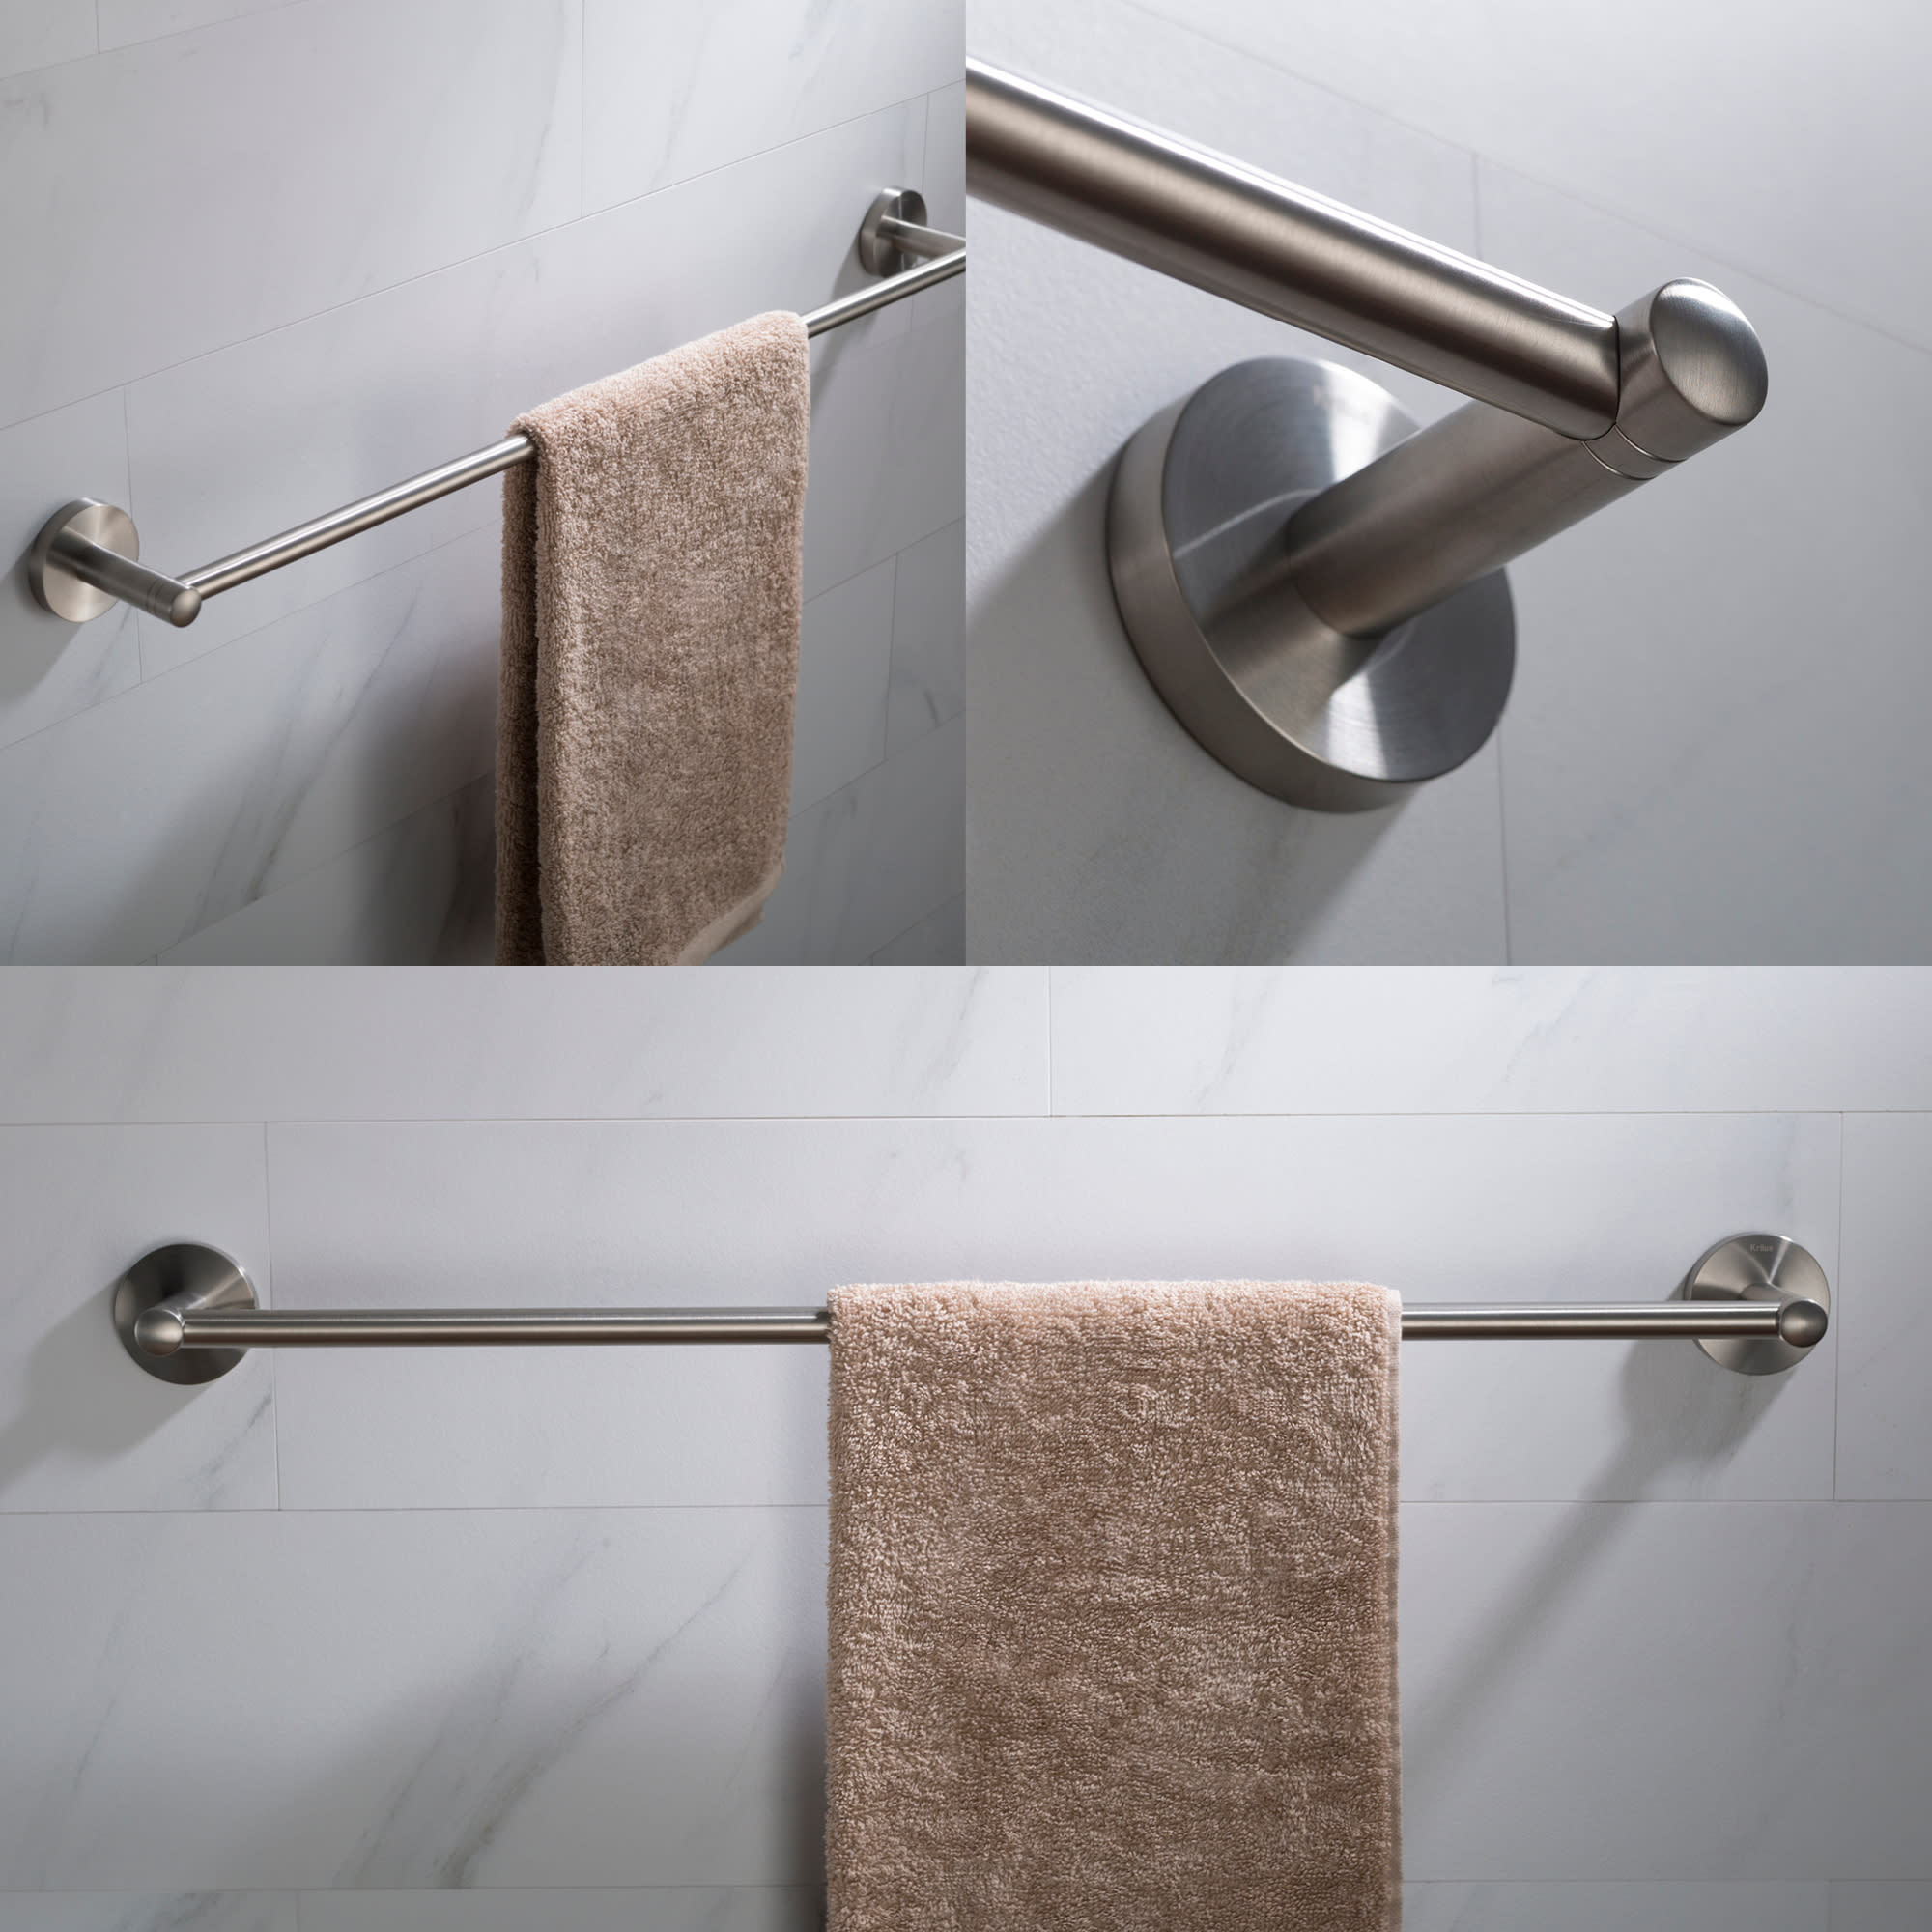 KRAUS Elie 24-inch Bathroom Towel Bar, Chrome Finish, KEA-18837CH - 2